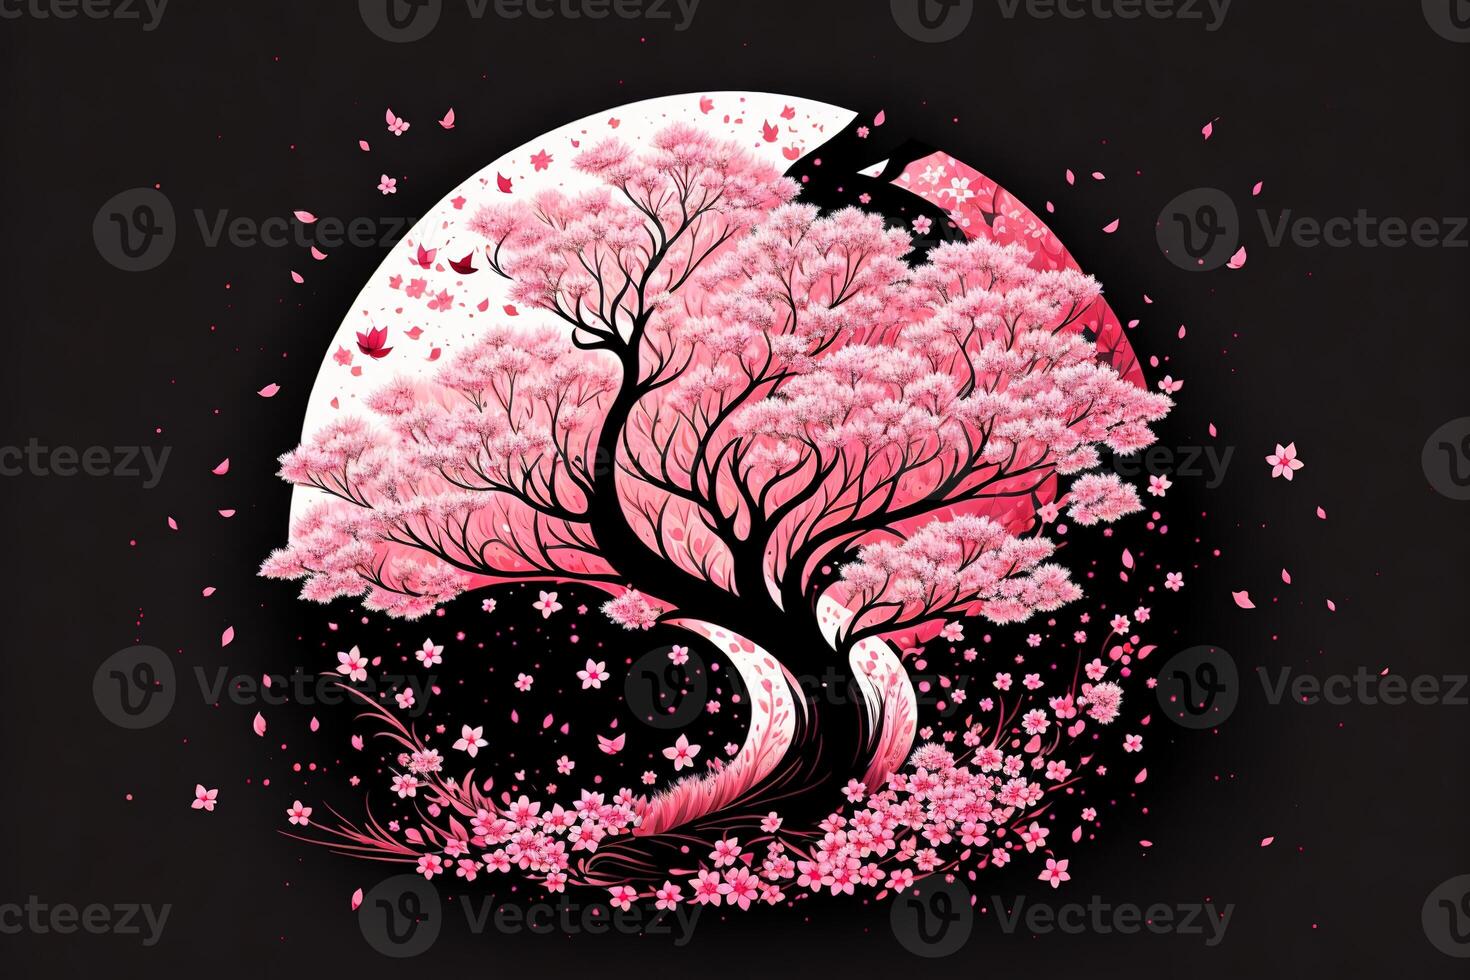 Cherry blossom illustration on black background by photo